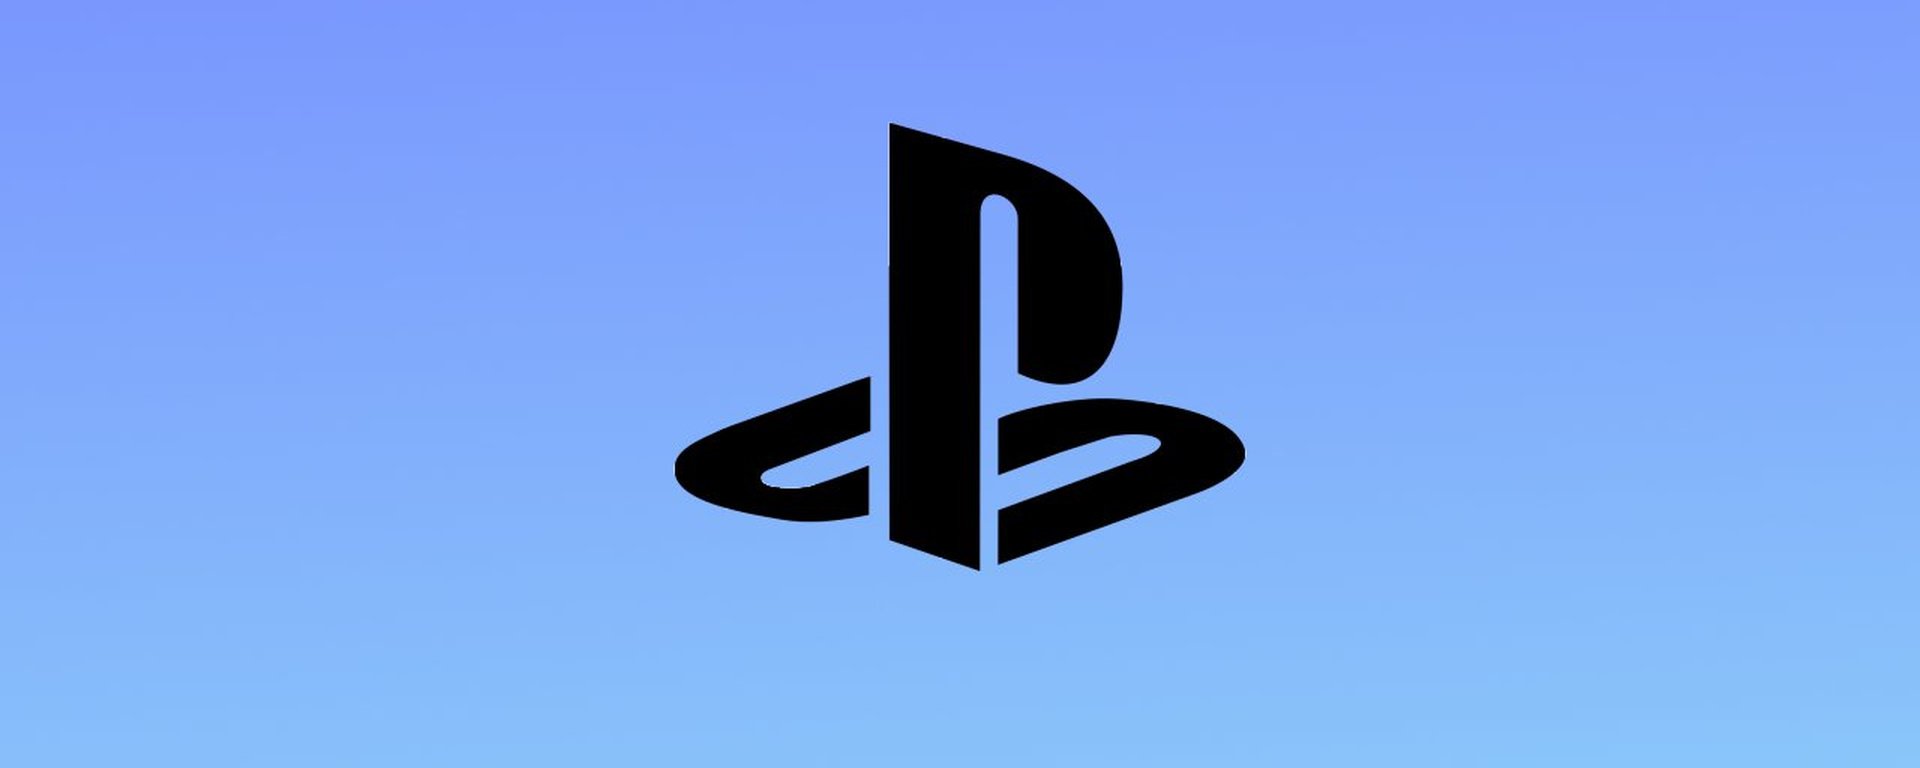 Логотип пс. Sony PLAYSTATION 4 logo. Sony PLAYSTATION символ. PLAYSTATION оригинальный логотип. PLAYSTATION 5 логотип.